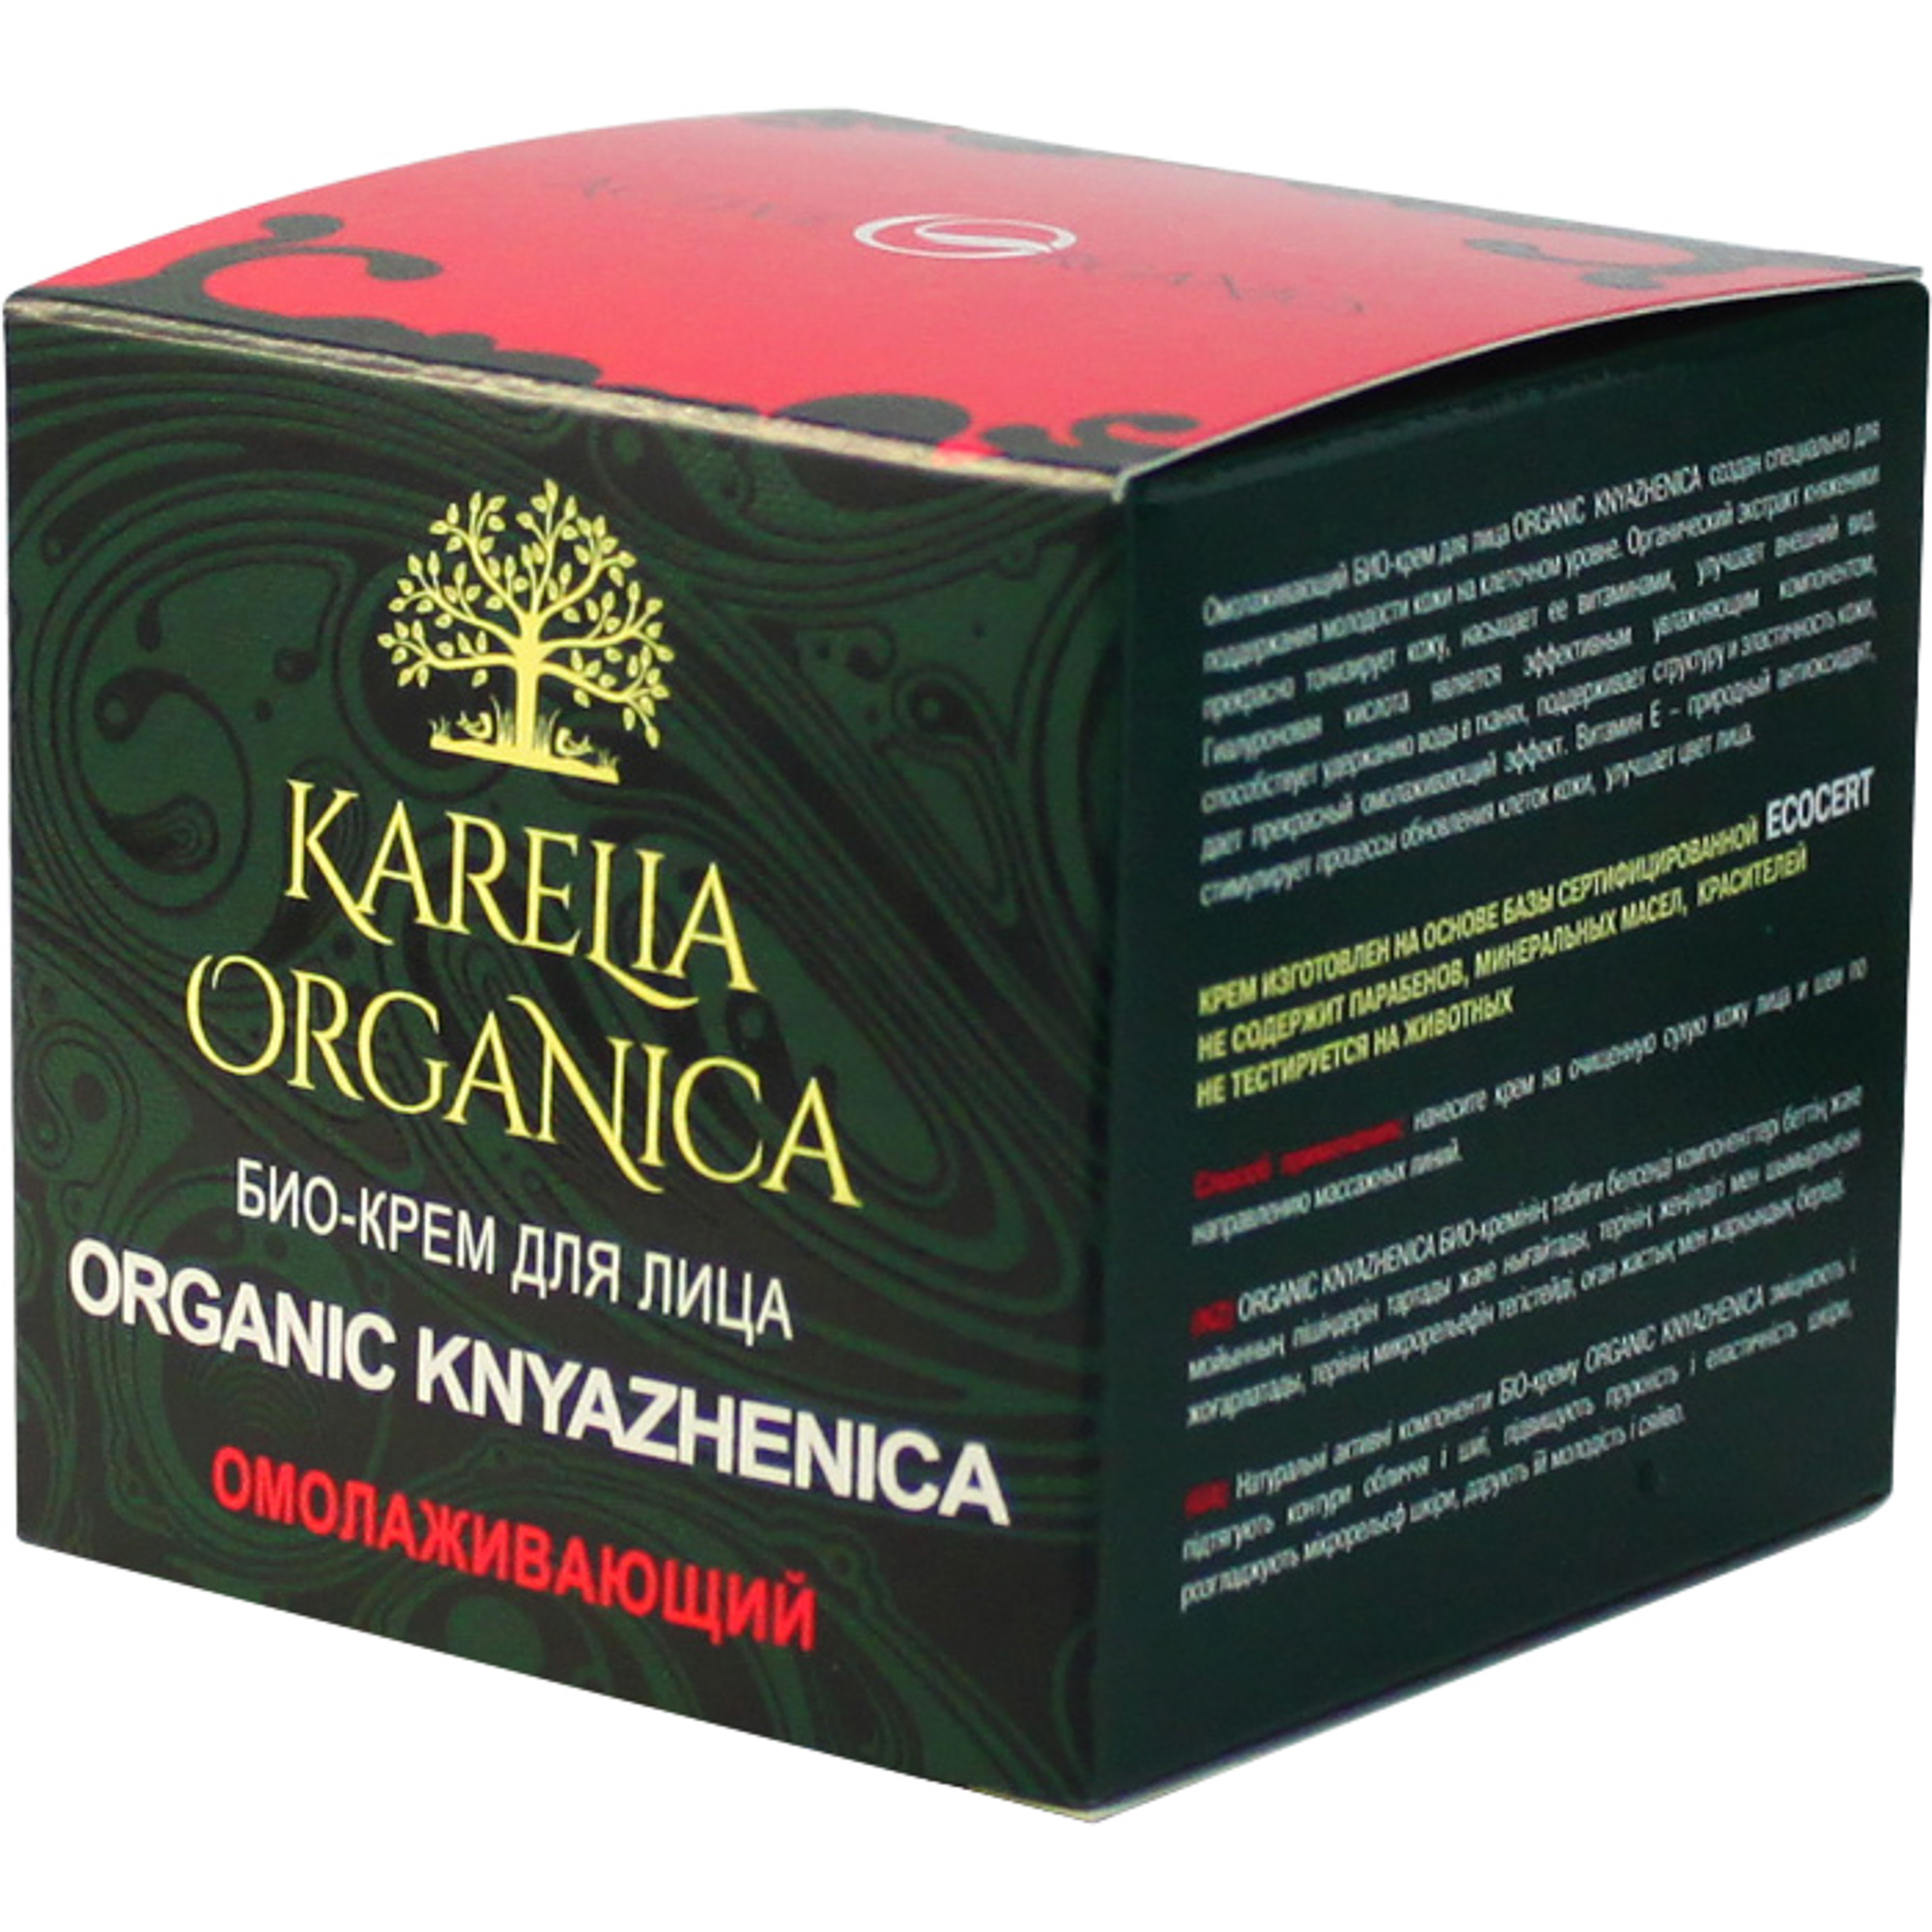 фото Крем для лица фратти нв karelia organica organic knyazhenica омолаживающий 50 мл